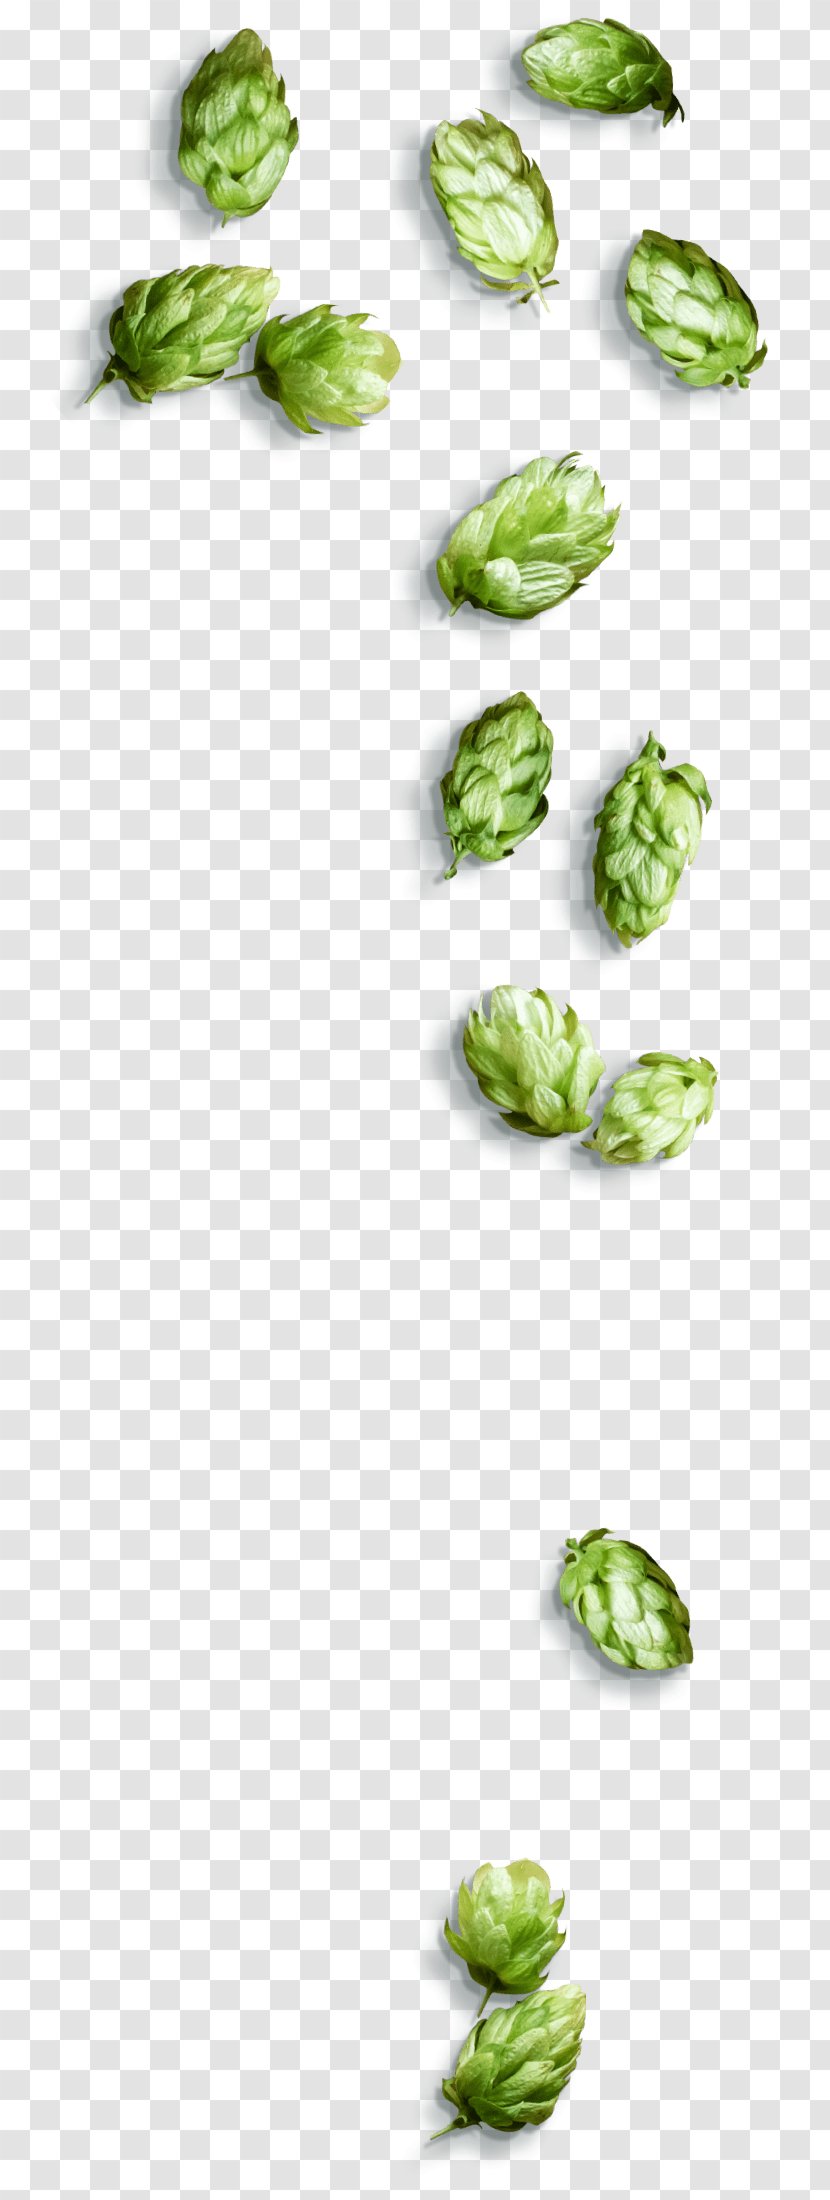 Vegetables Cartoon - Brussels Sprout - Humulus Lupulus Superfood Transparent PNG